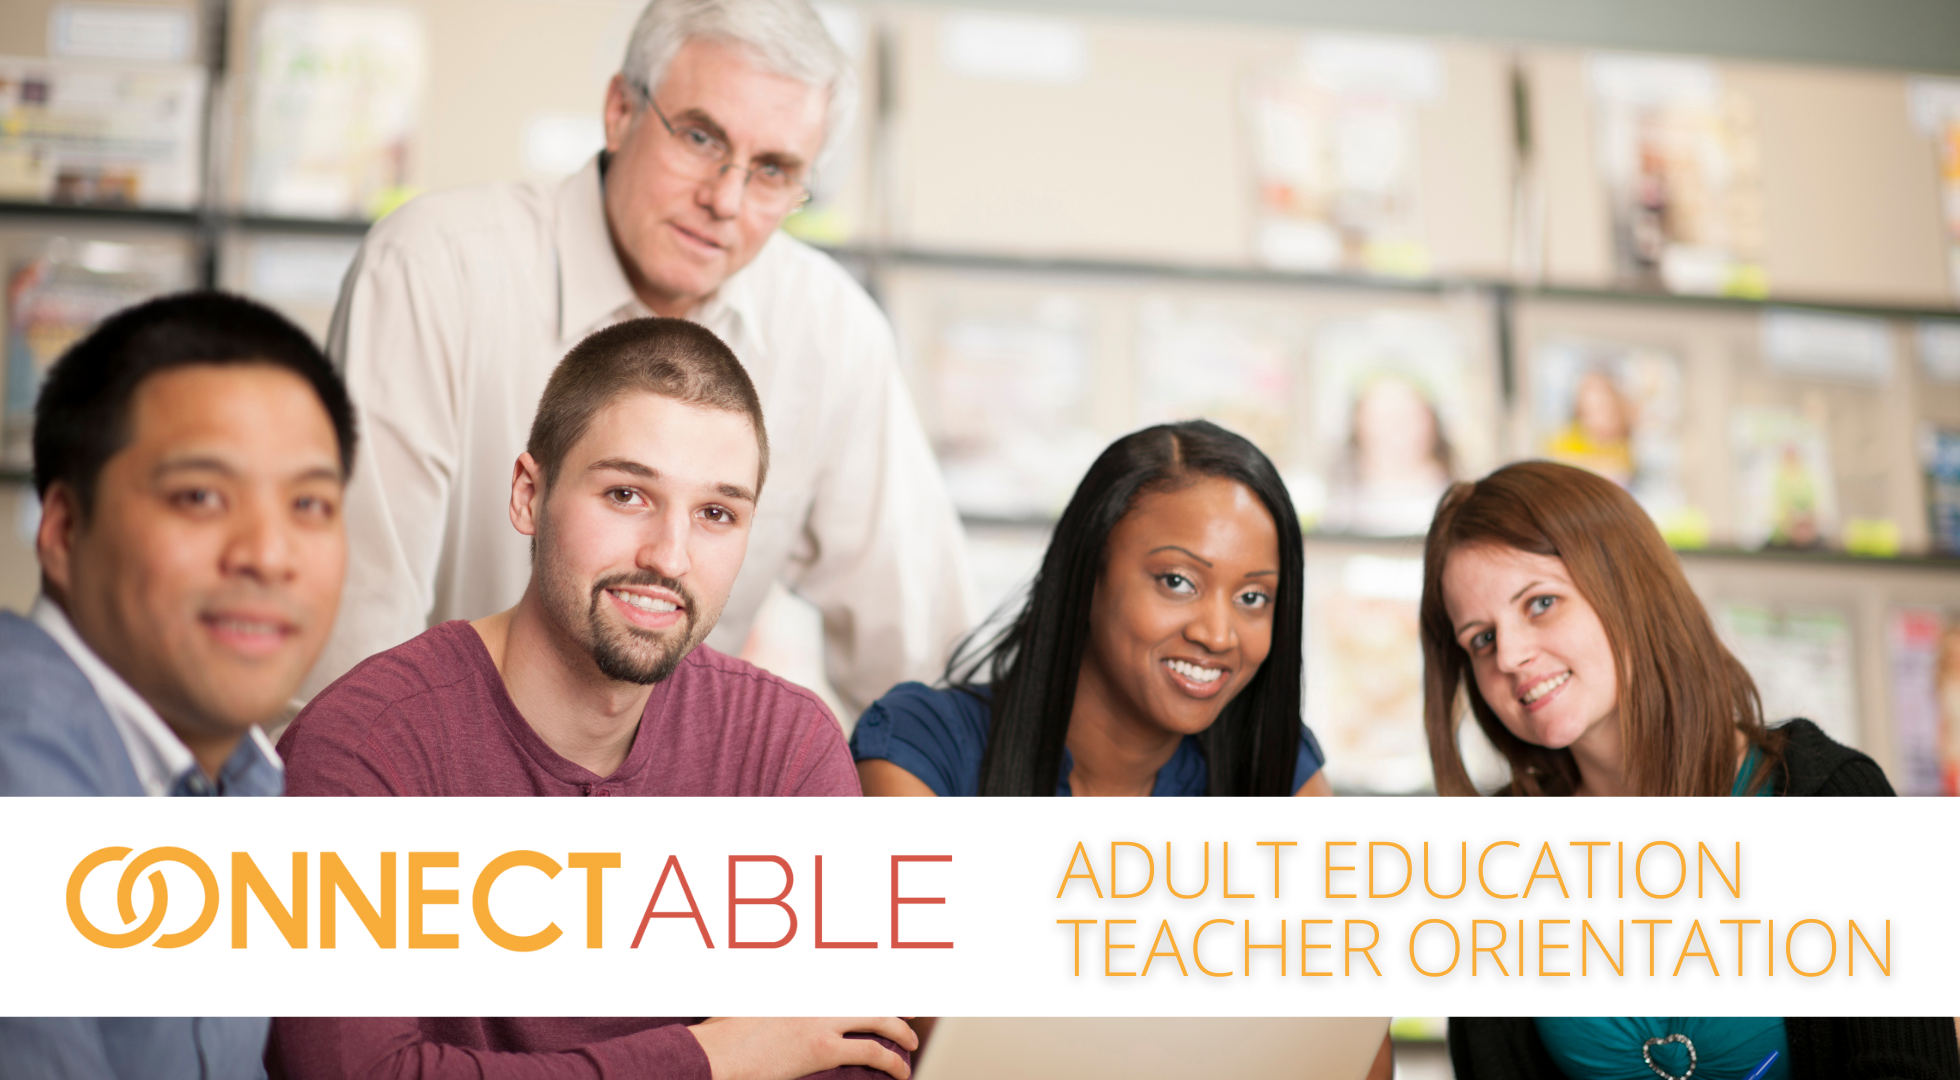 Adult Education Teacher Orientation